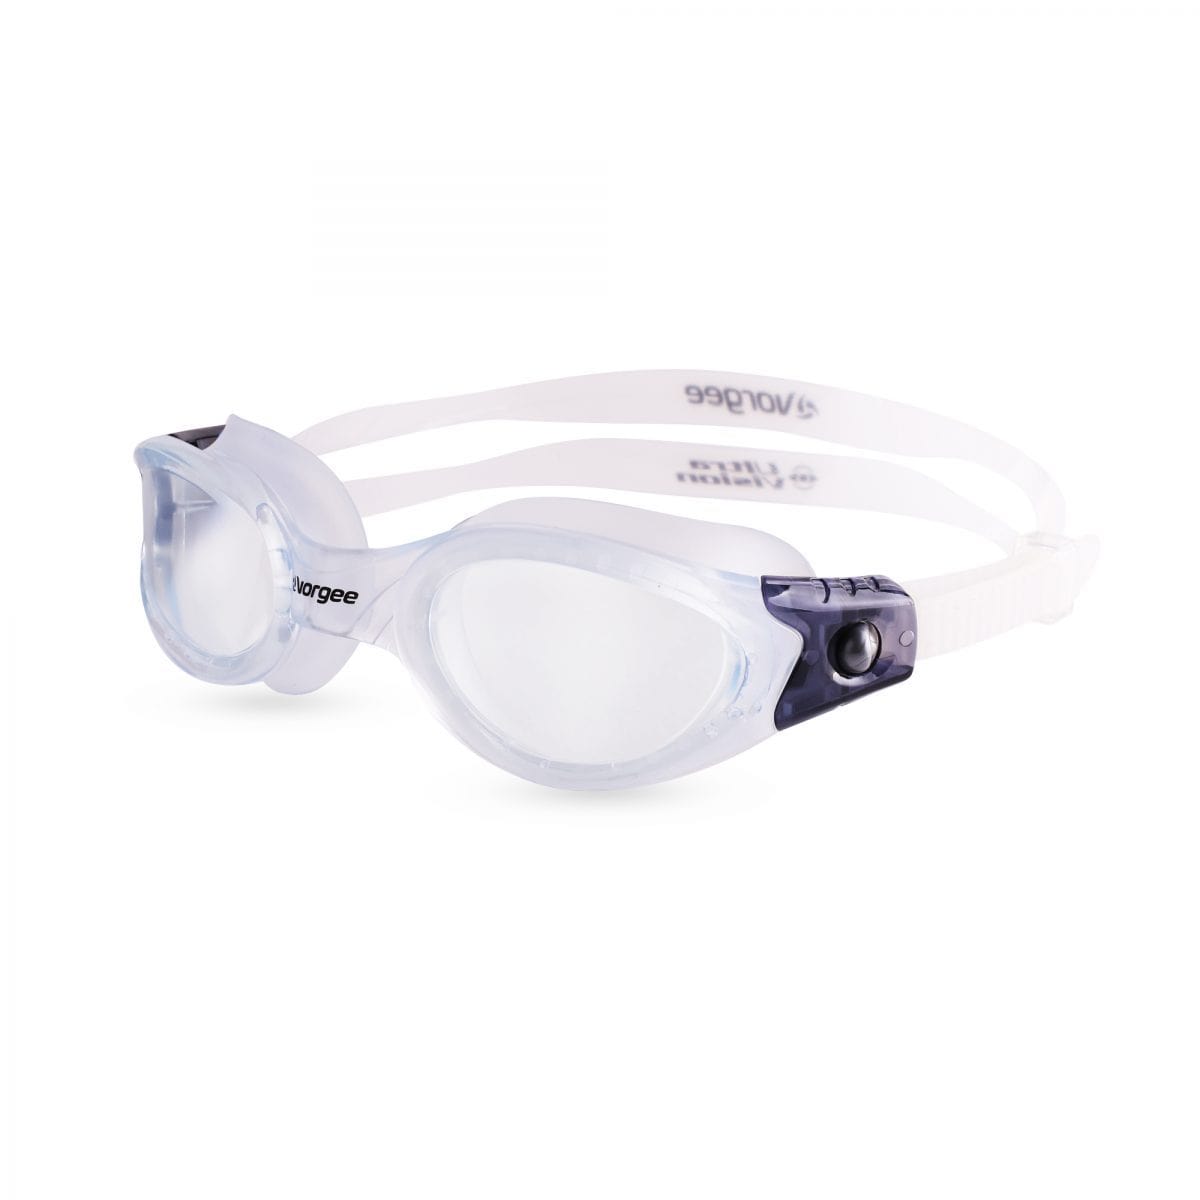 Vorgee Vortech Ultra Vision -Clear Lens Swim Goggle by Vorgee - Ocean Junction